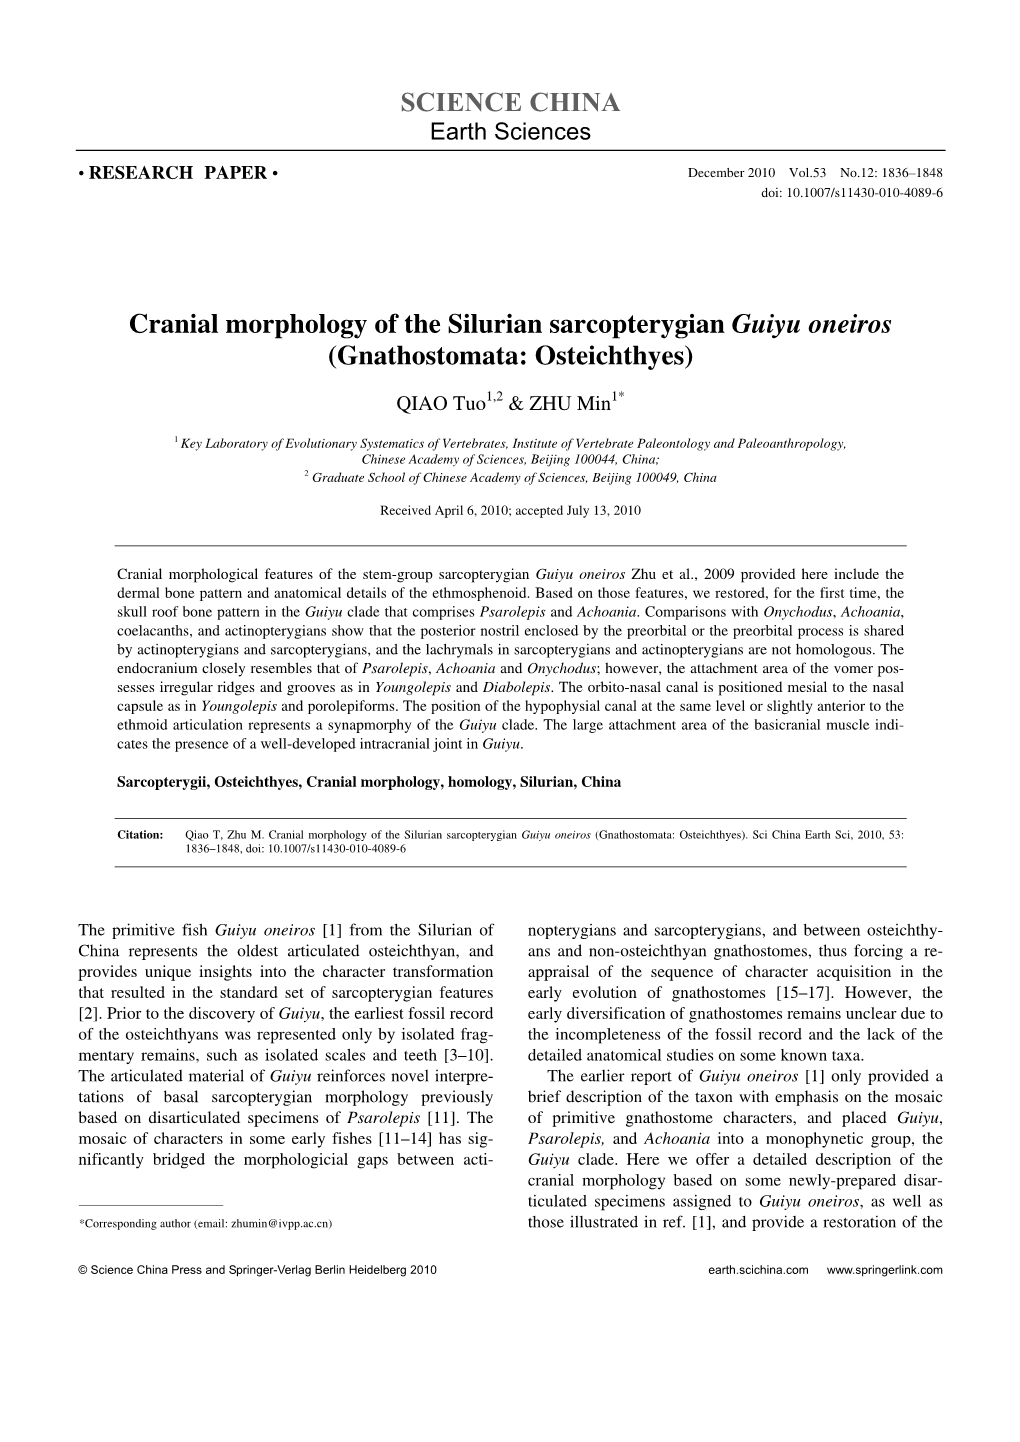 SCIENCE CHINA Cranial Morphology of the Silurian Sarcopterygian Guiyu Oneiros (Gnathostomata: Osteichthyes)